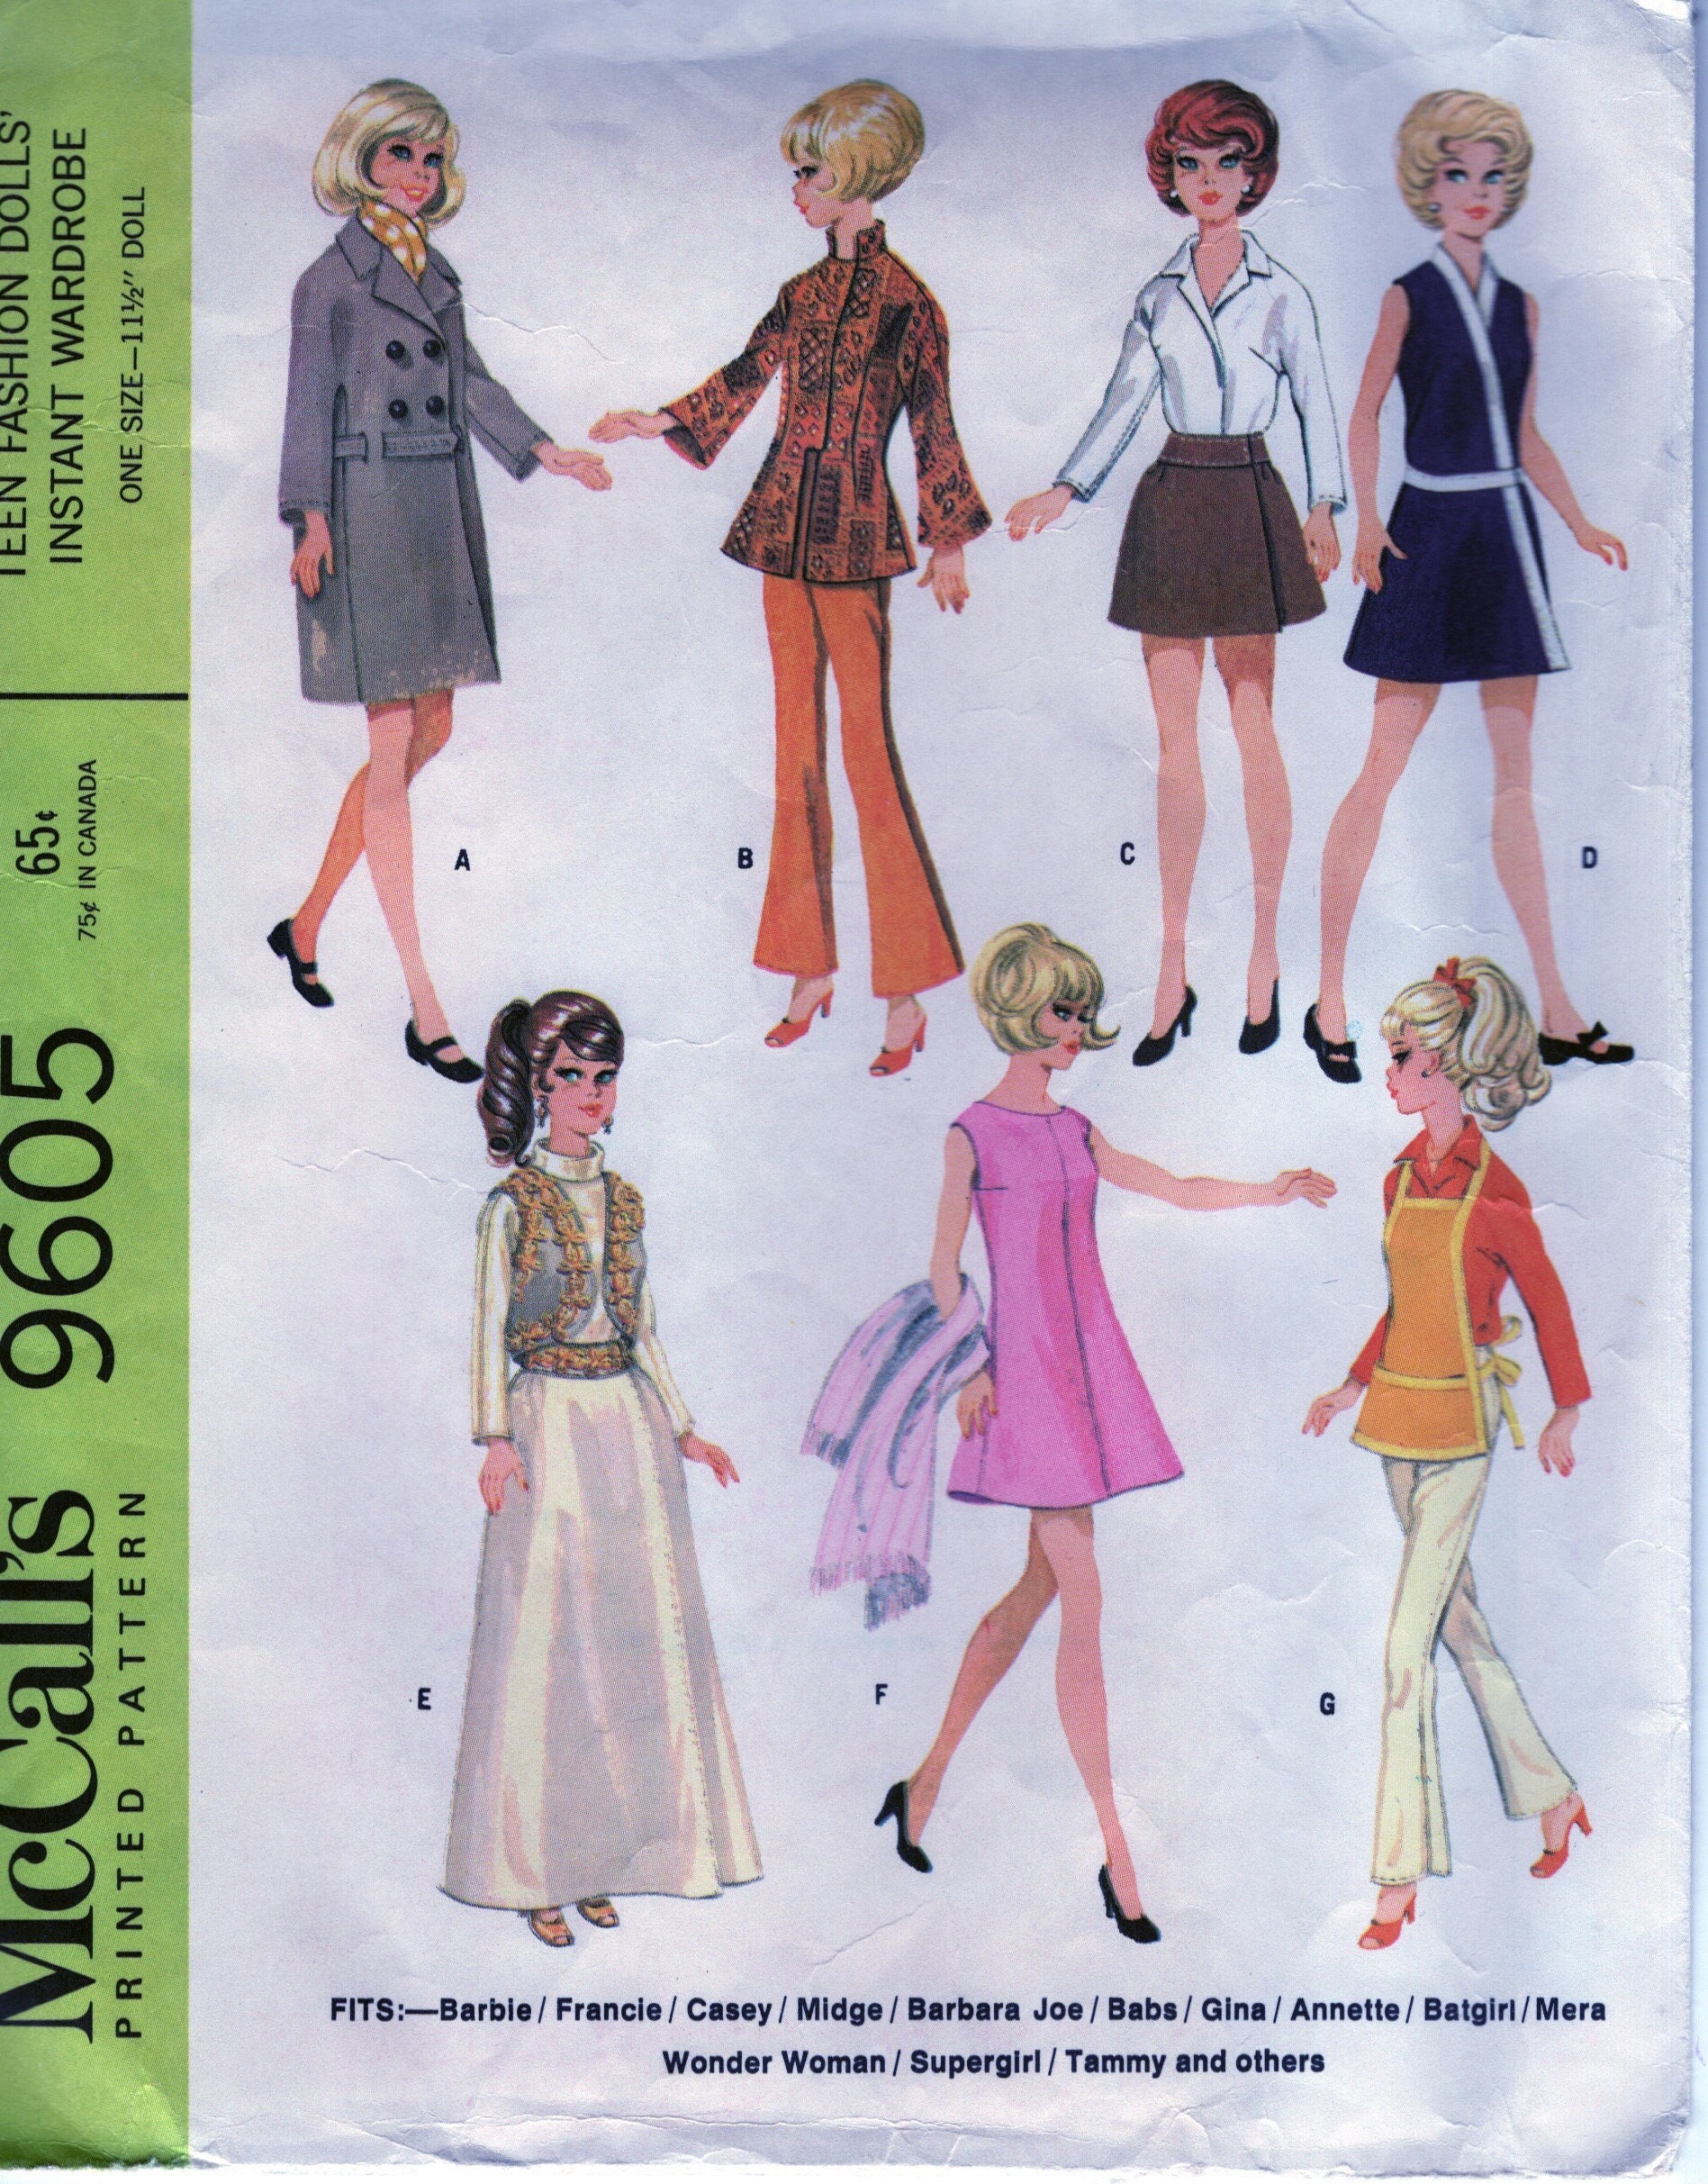 1960s fashion for teenage girls